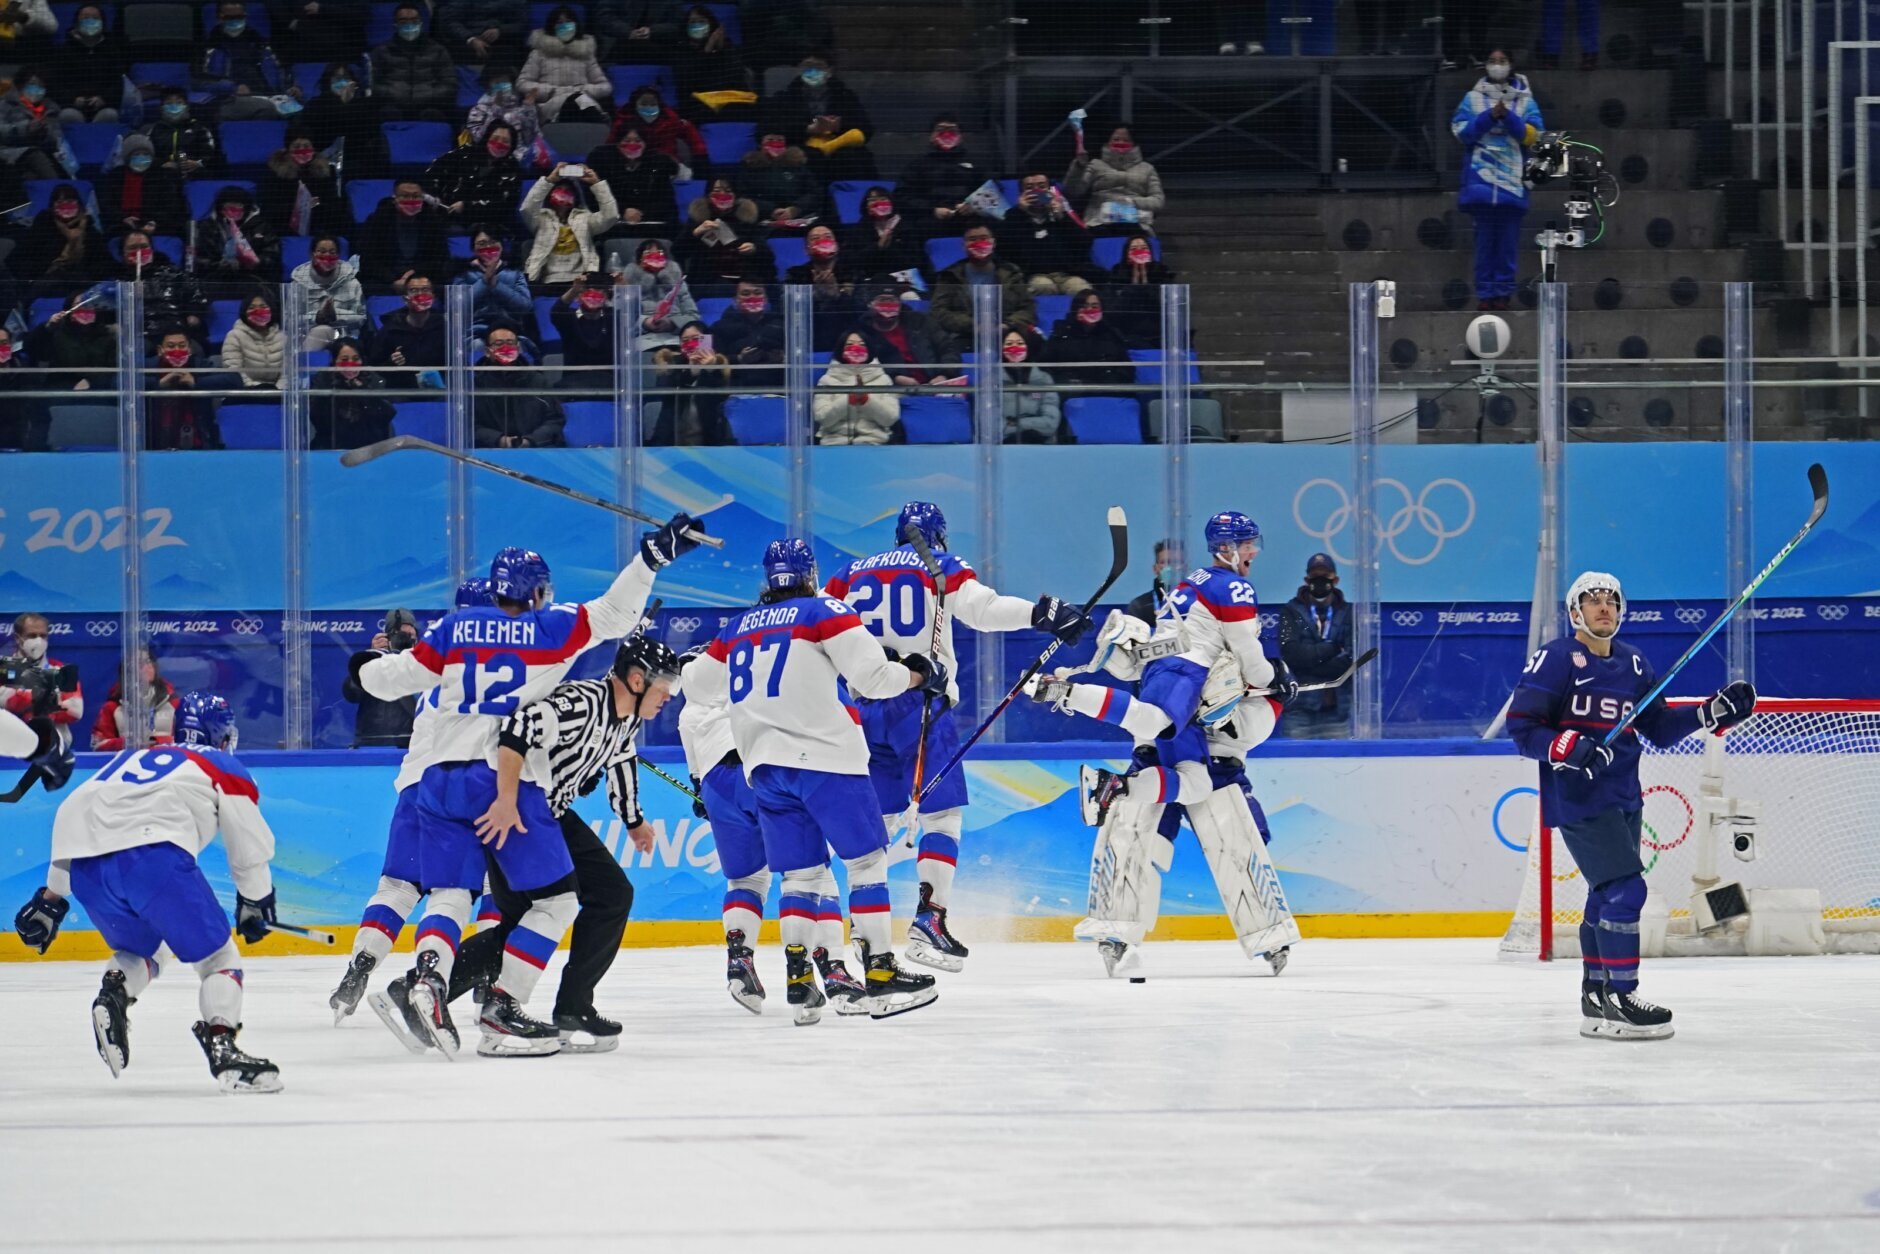 https://wtop.com/wp-content/uploads/2022/02/Beijing_Olympics_Ice_Hockey_20502-1880x1254.jpg